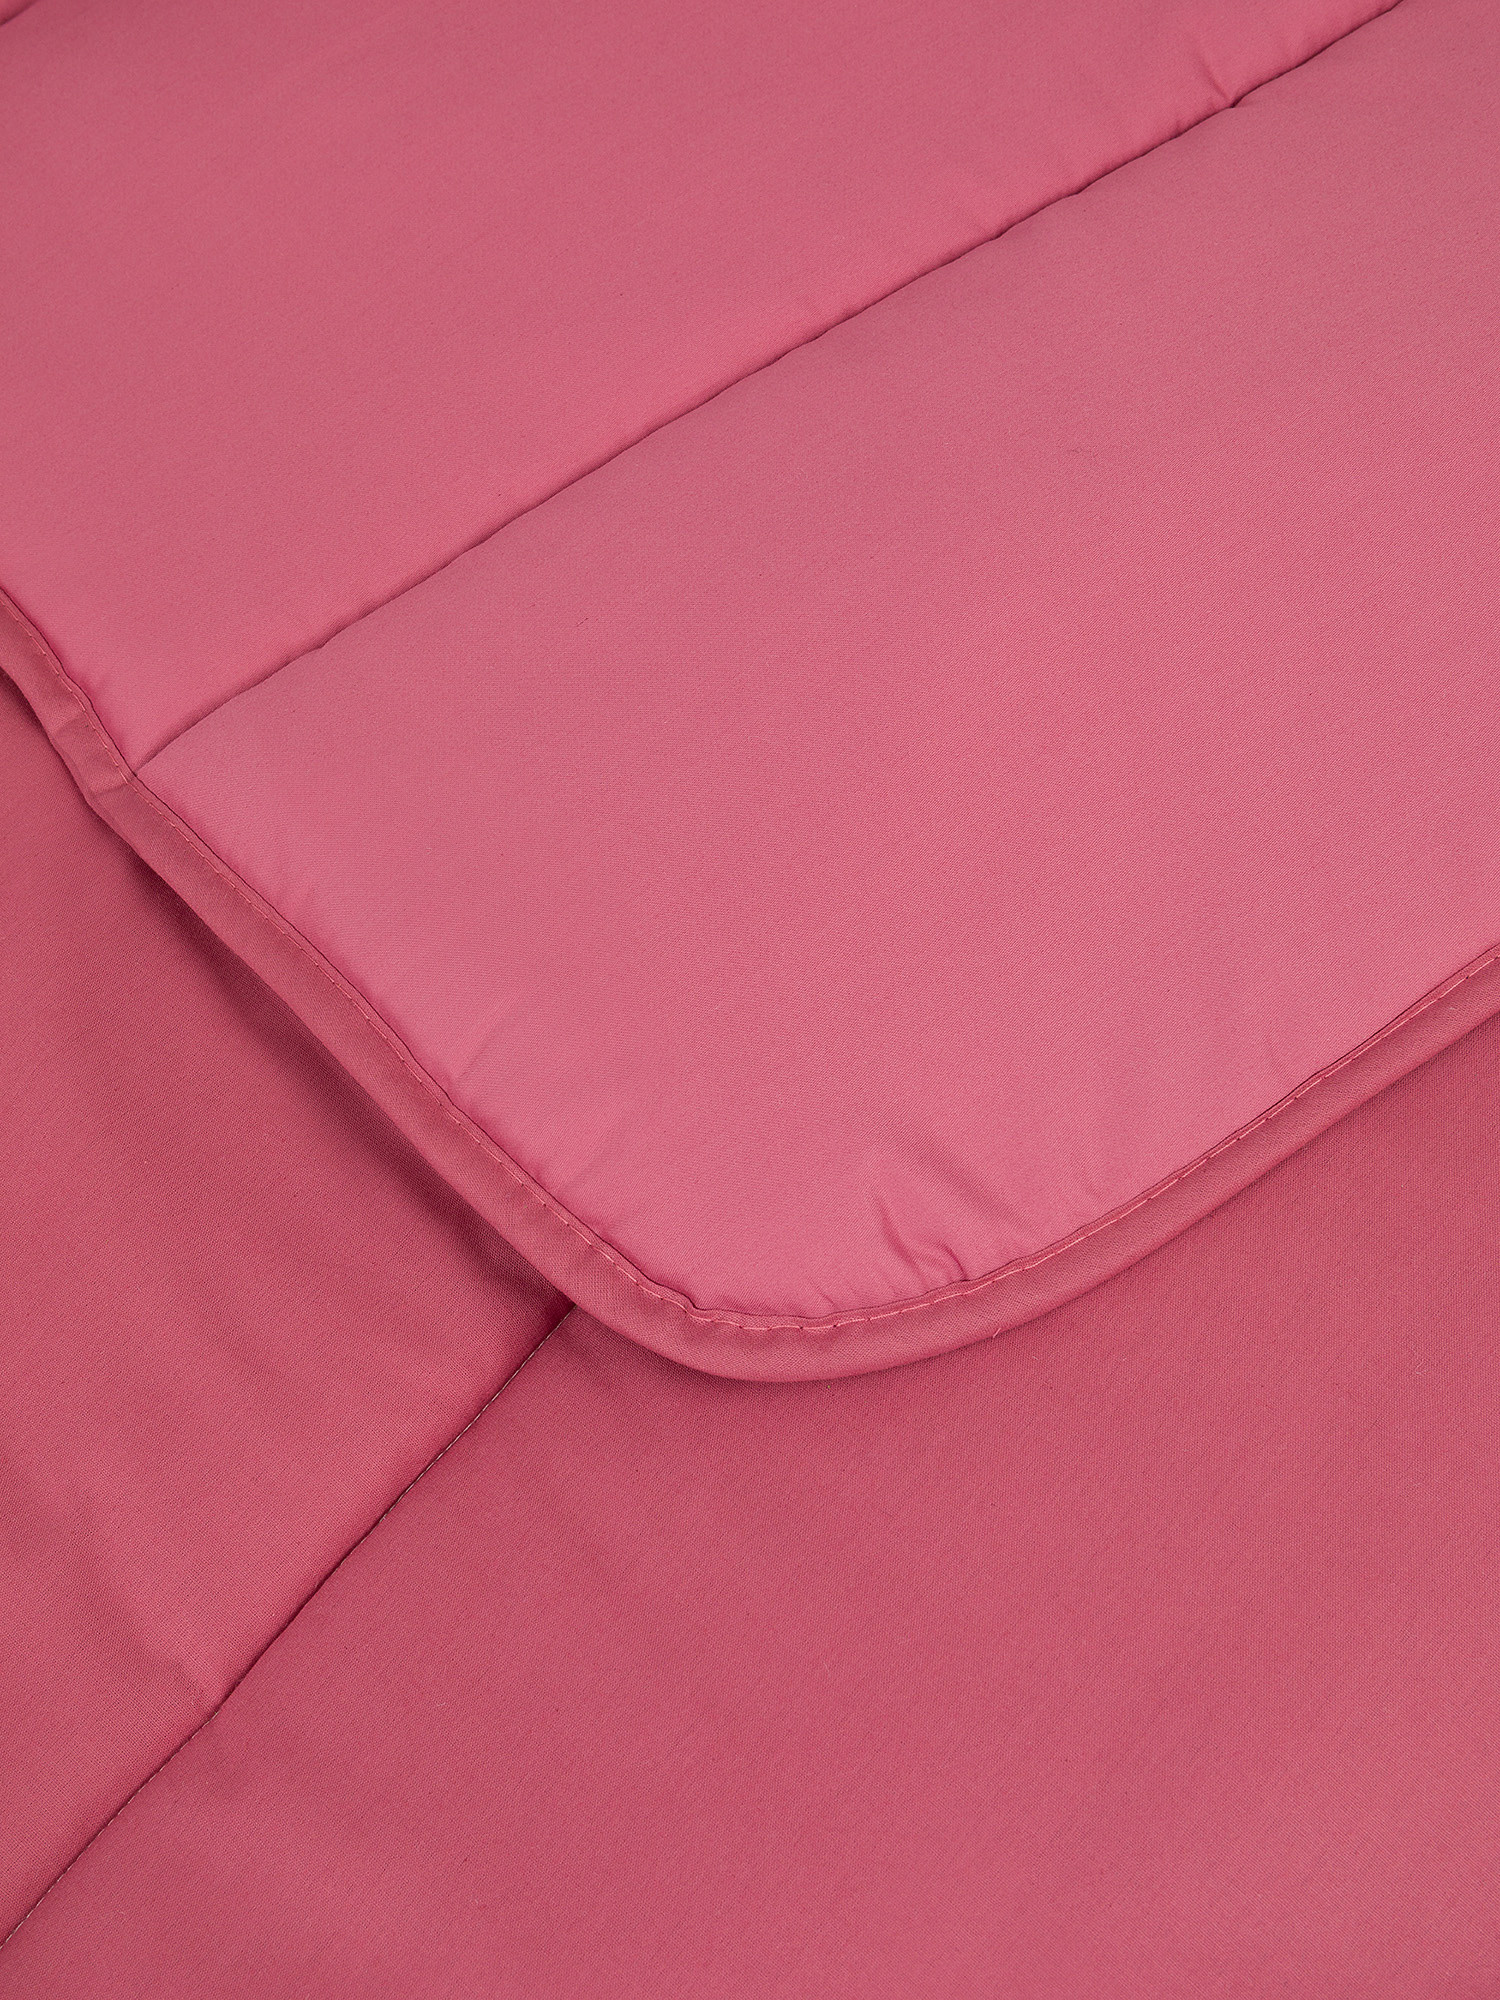 Solid color cotton satin quilt, Pink, large image number 1